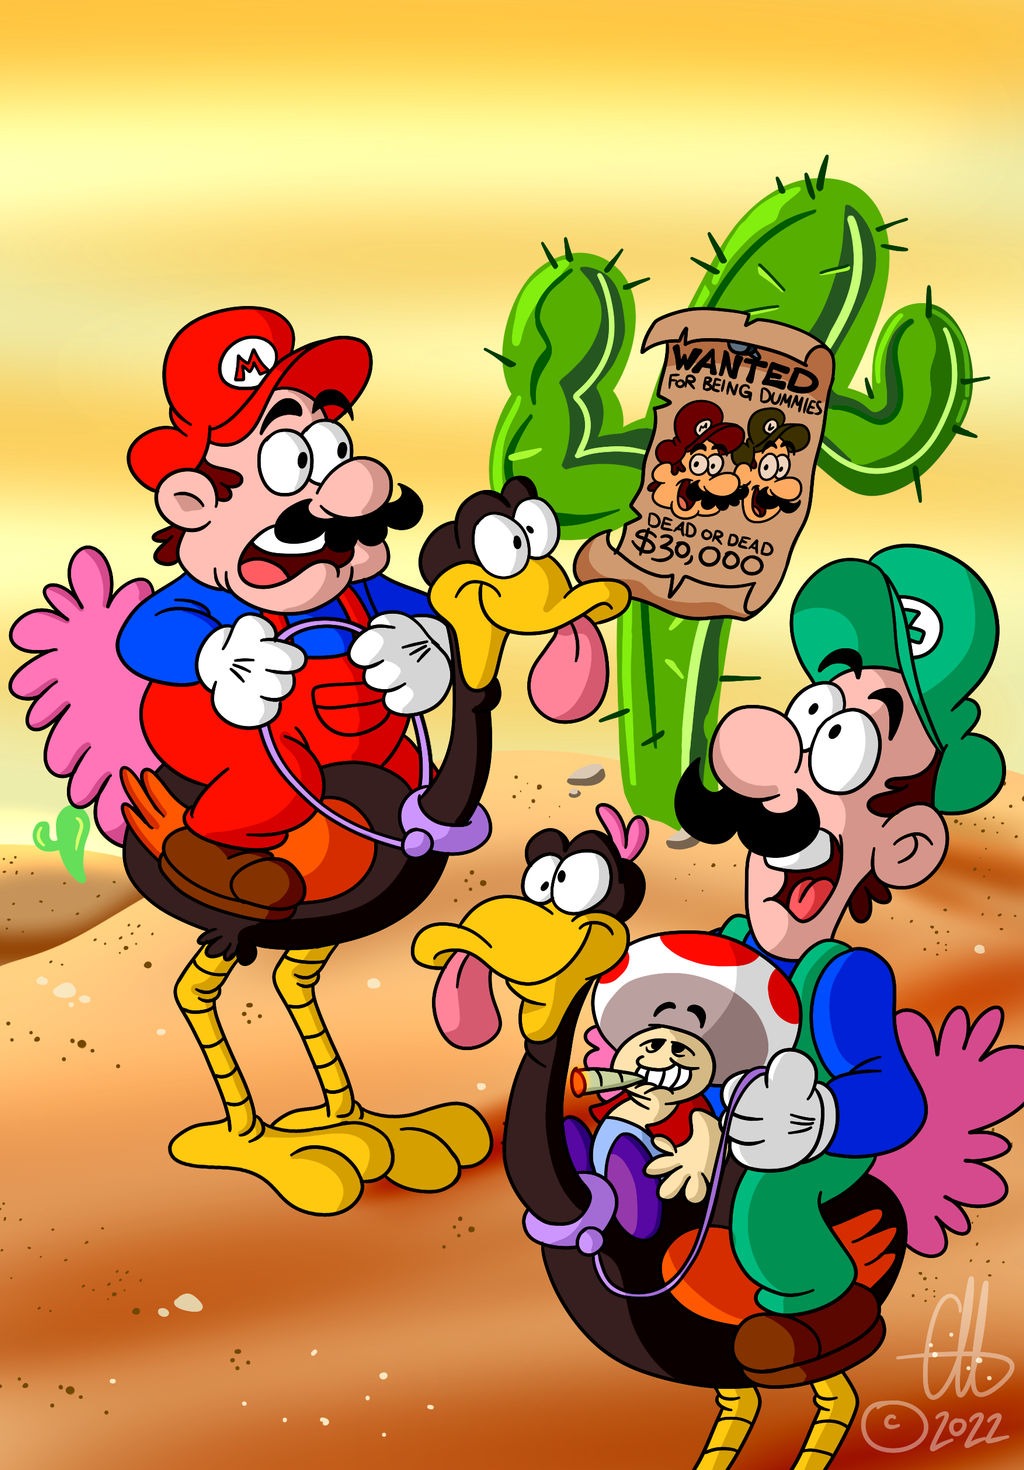 The Mario Odyssey cartoon takes some liberties by Chopfe on DeviantArt